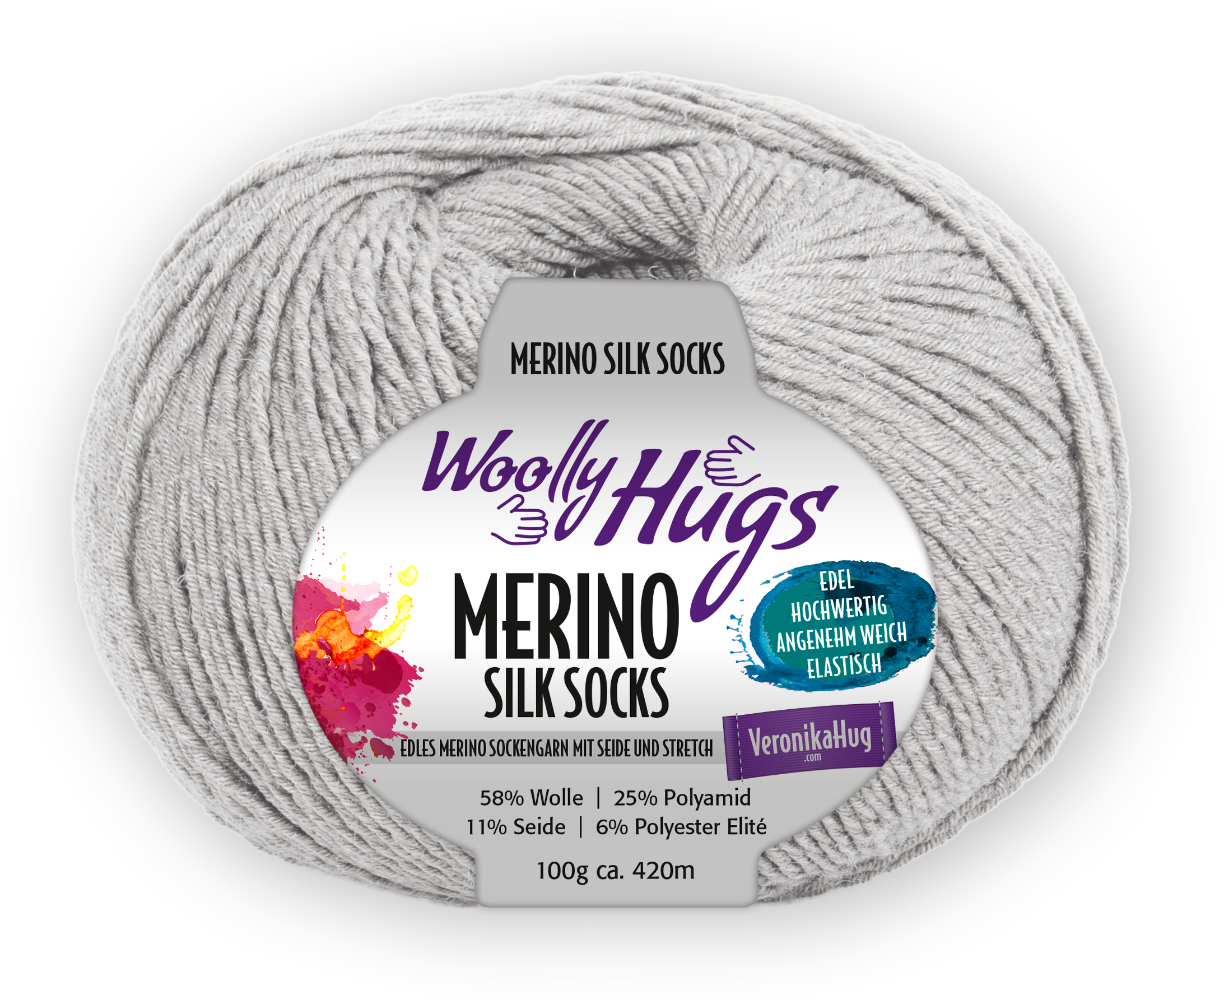 Merino Silk Socks Stretch, 4-fach von Woolly Hugs 0291 - hellgrau